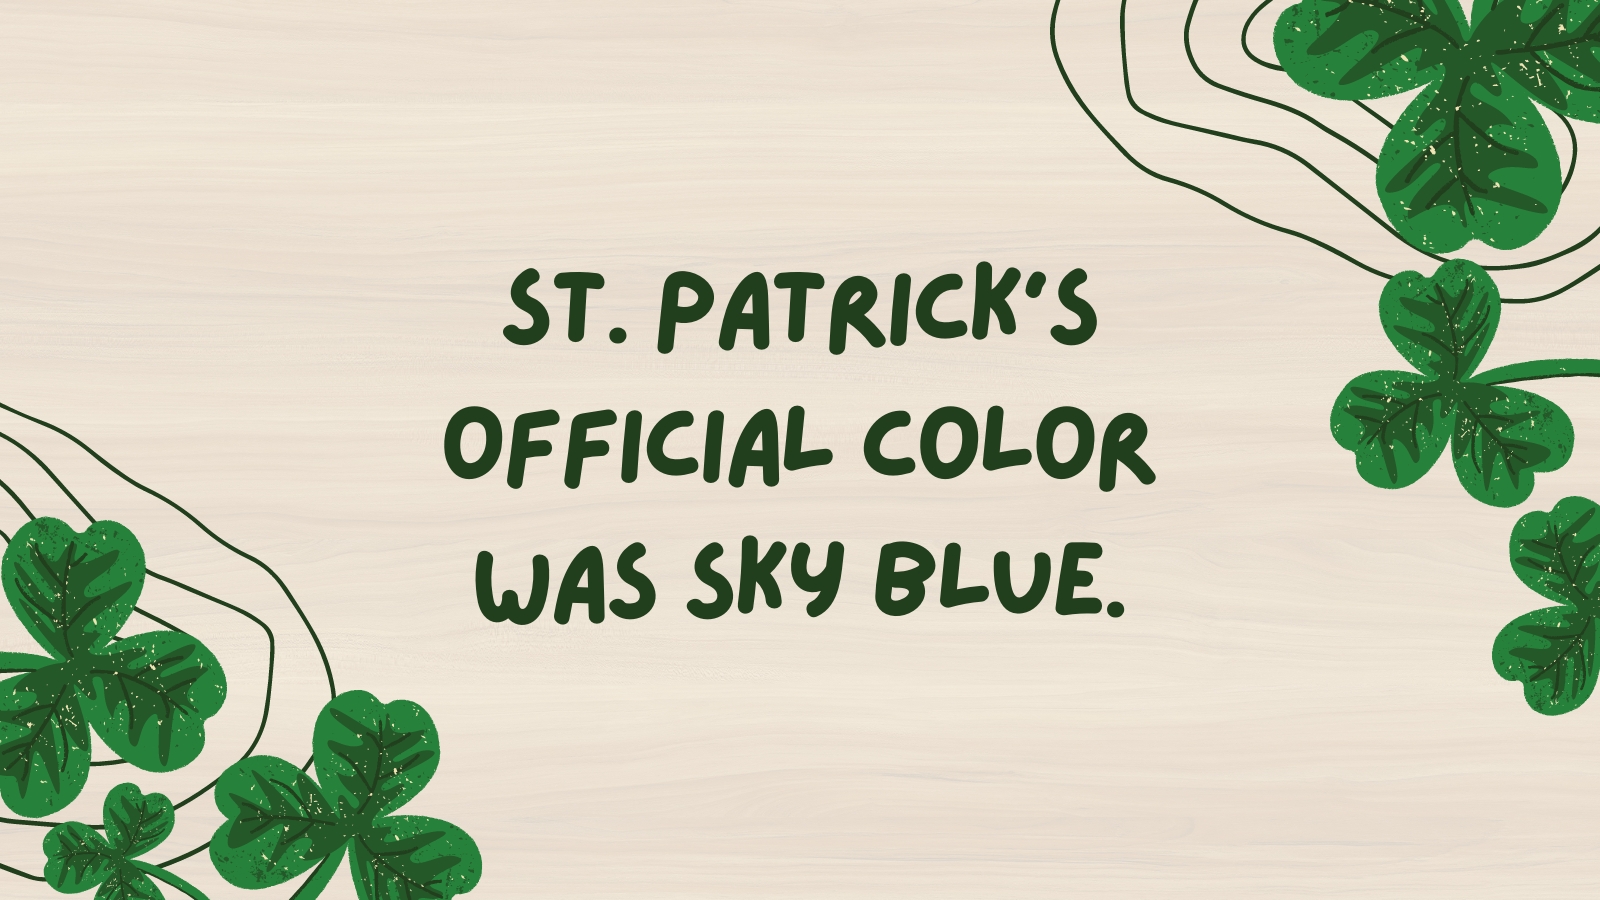 St. Patrick's official color was sky blue.